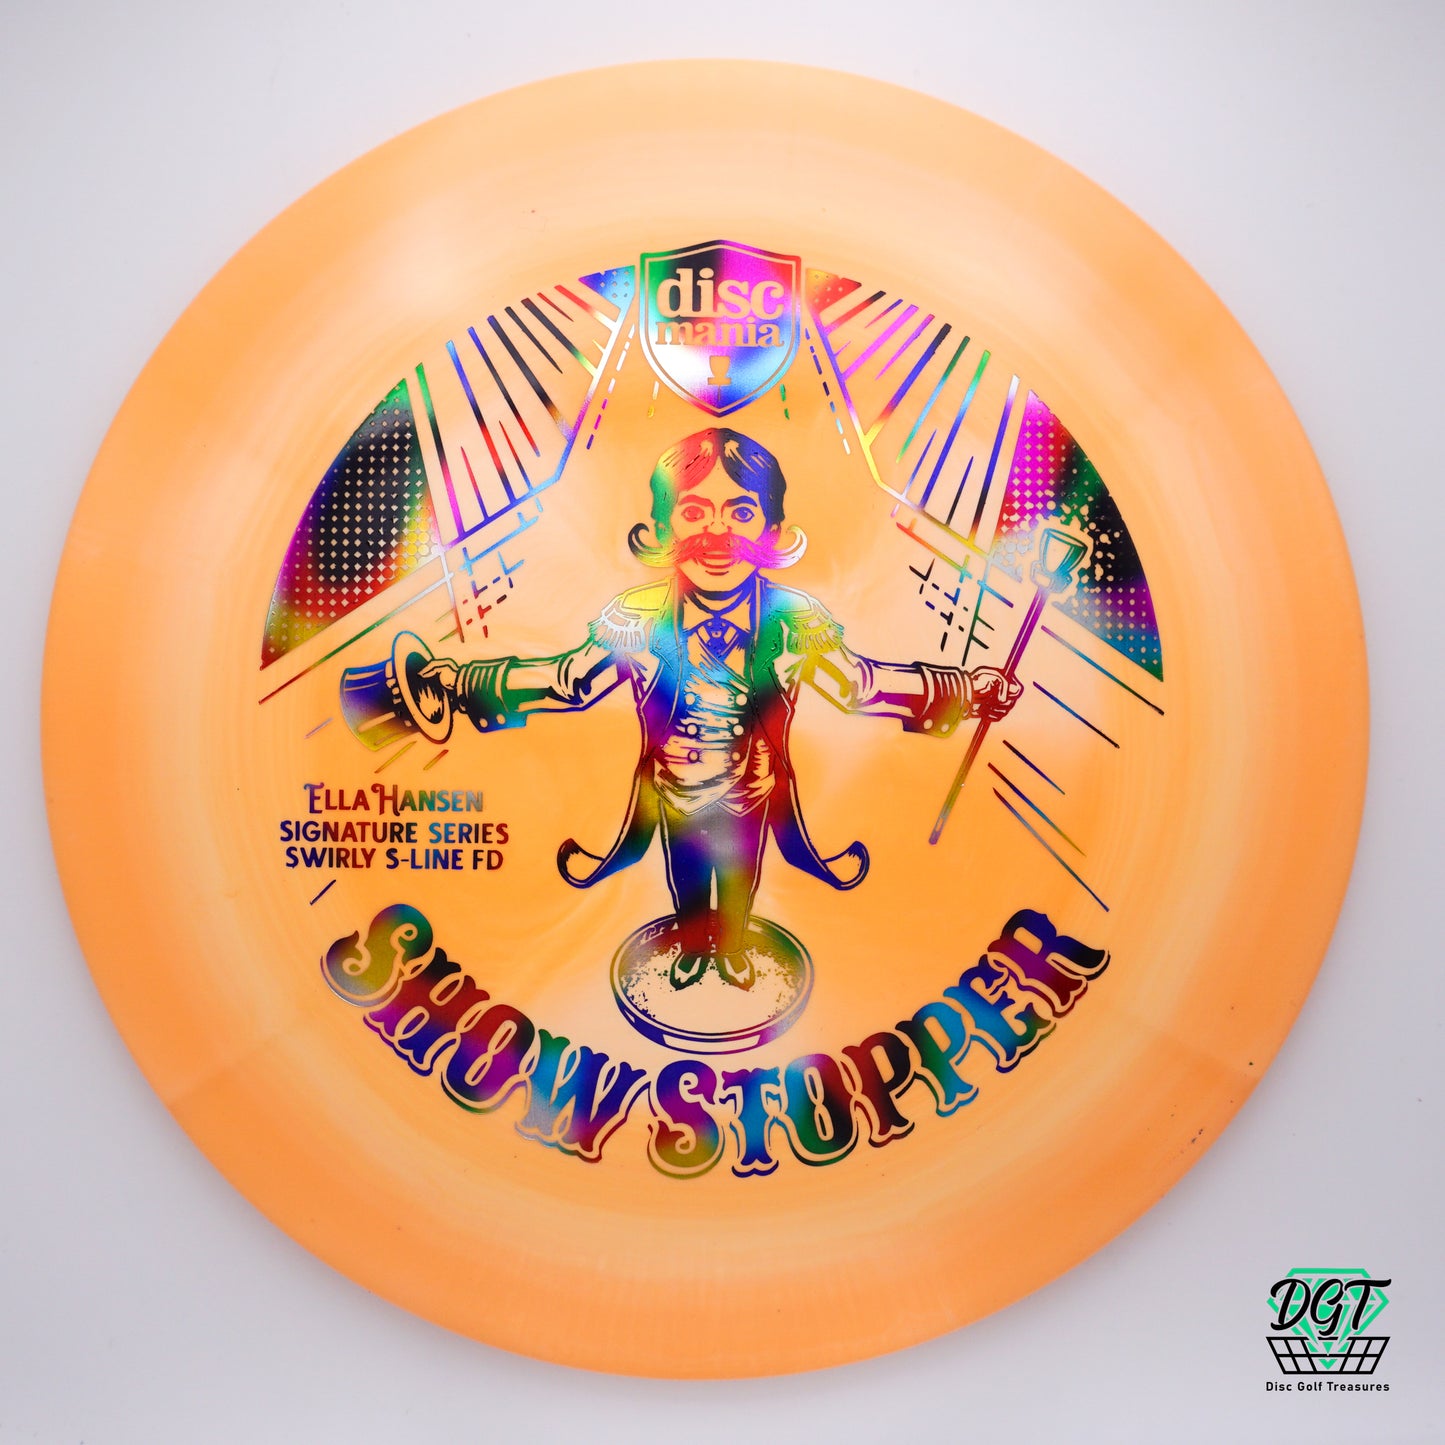 Swirly S-Line FD - Show Stopper